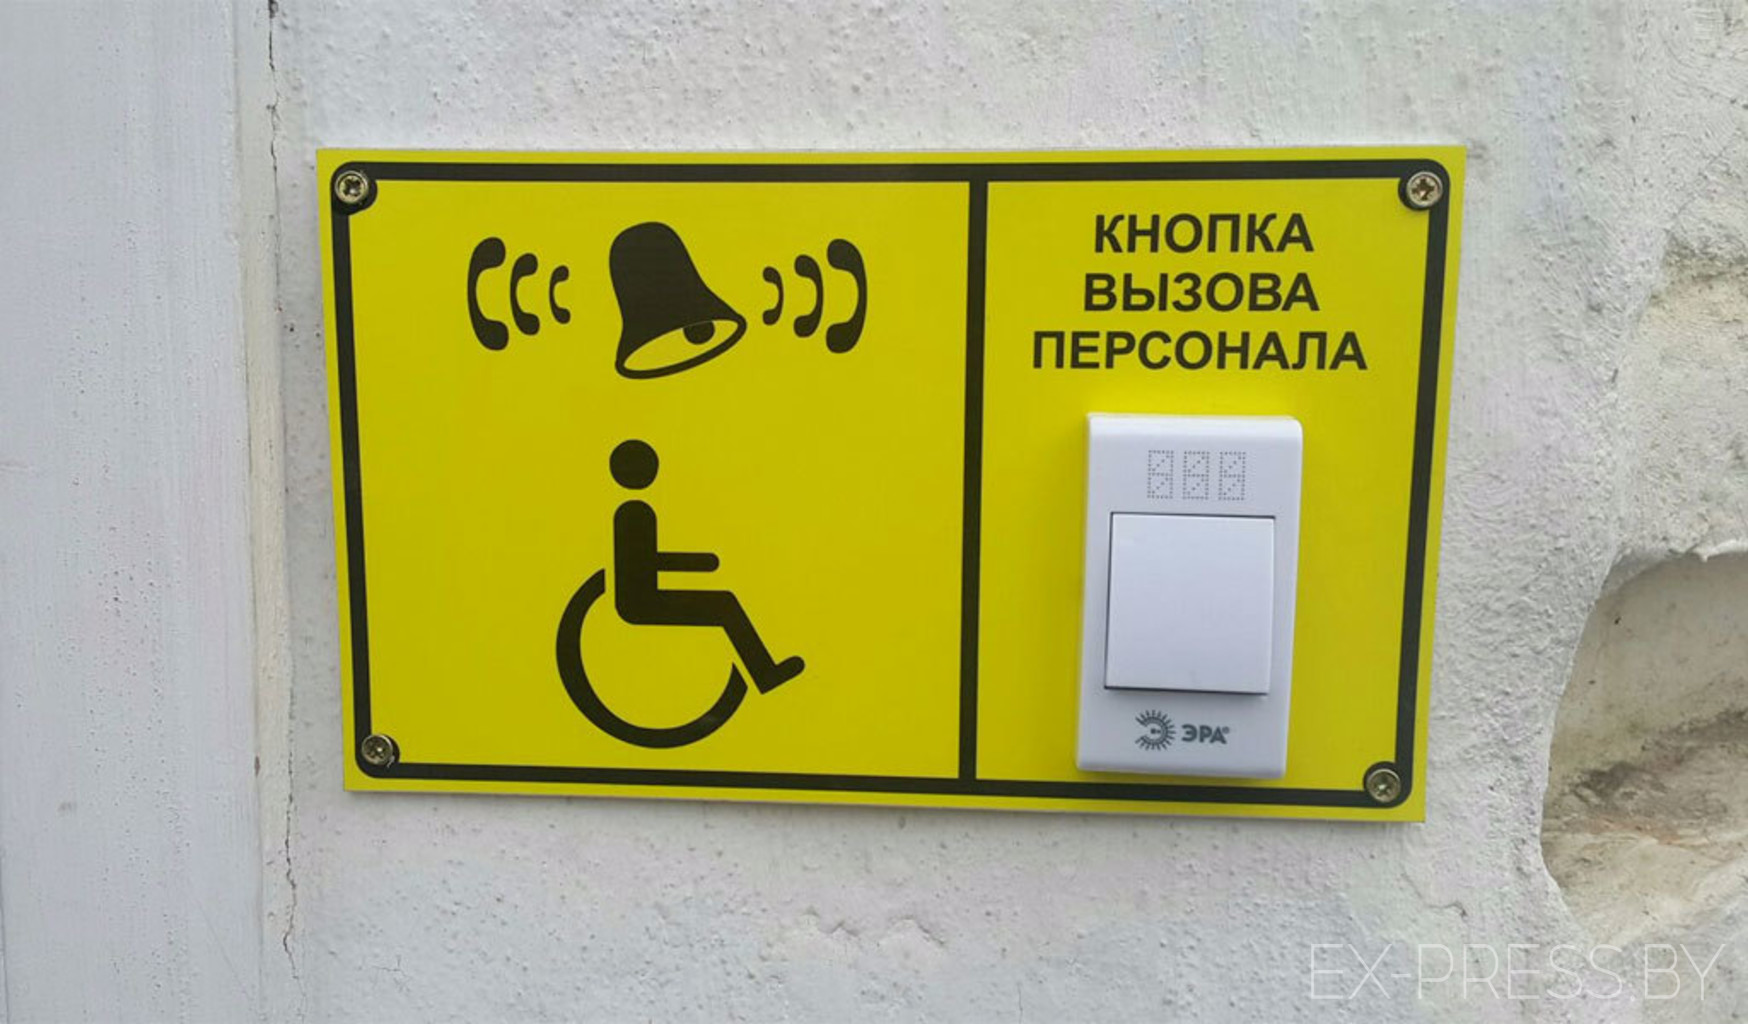 32 мгн. Кнопка вызова персонала для МГН. Табличка кнопка для инвалидов. Табличка кнопка вызова персонала для инвалидов. Вызов персонала для инвалидов табличка.